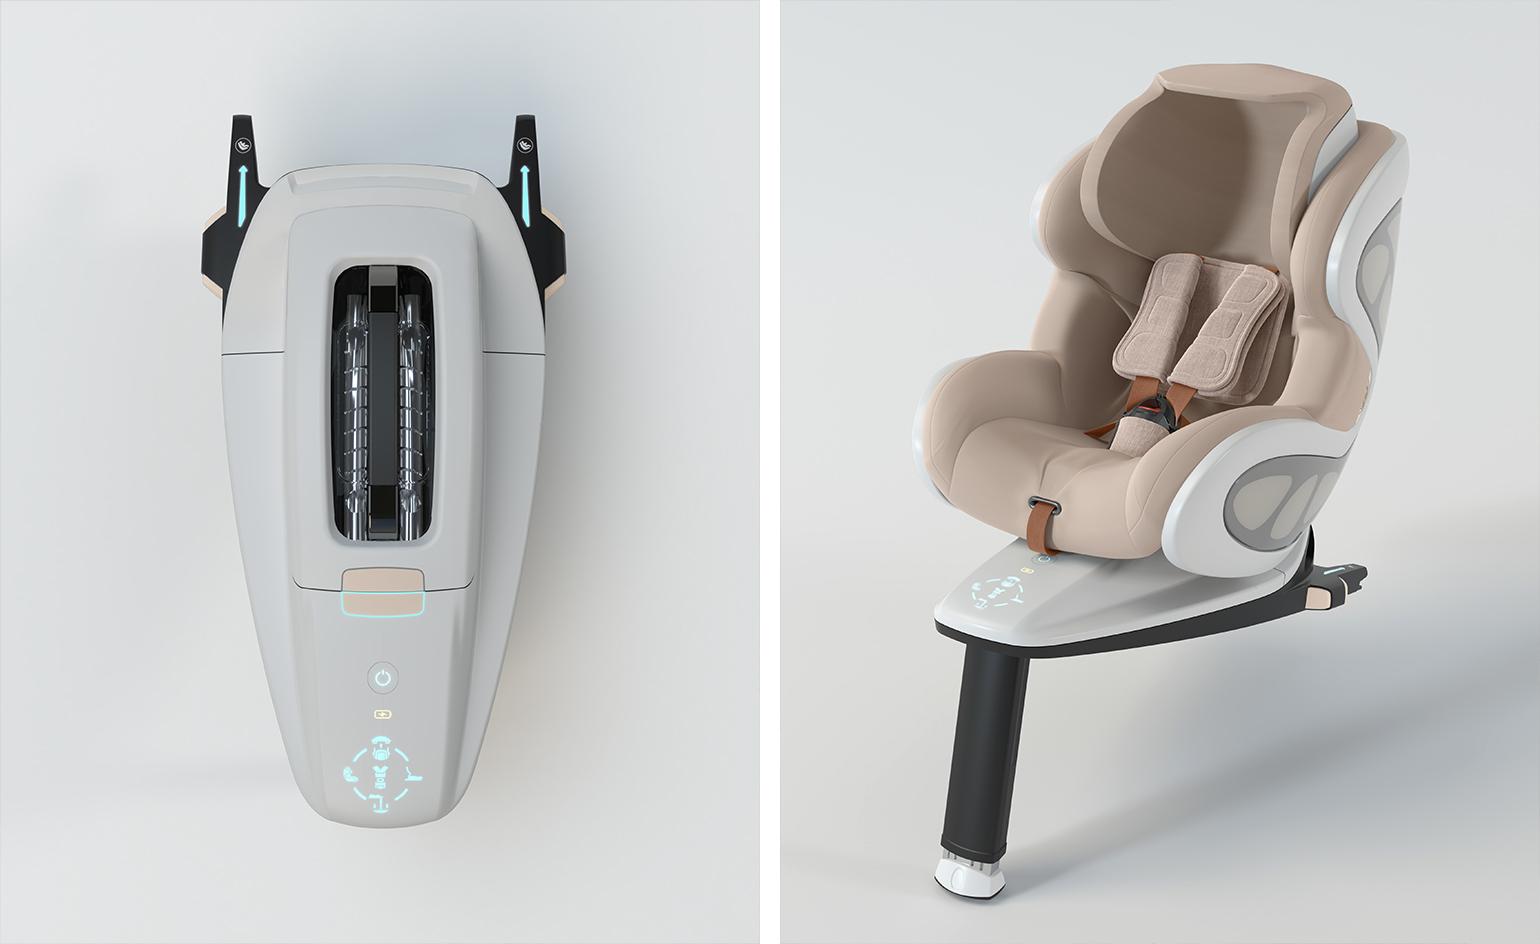 BabyArk child car seat designed by Frank Stephenson